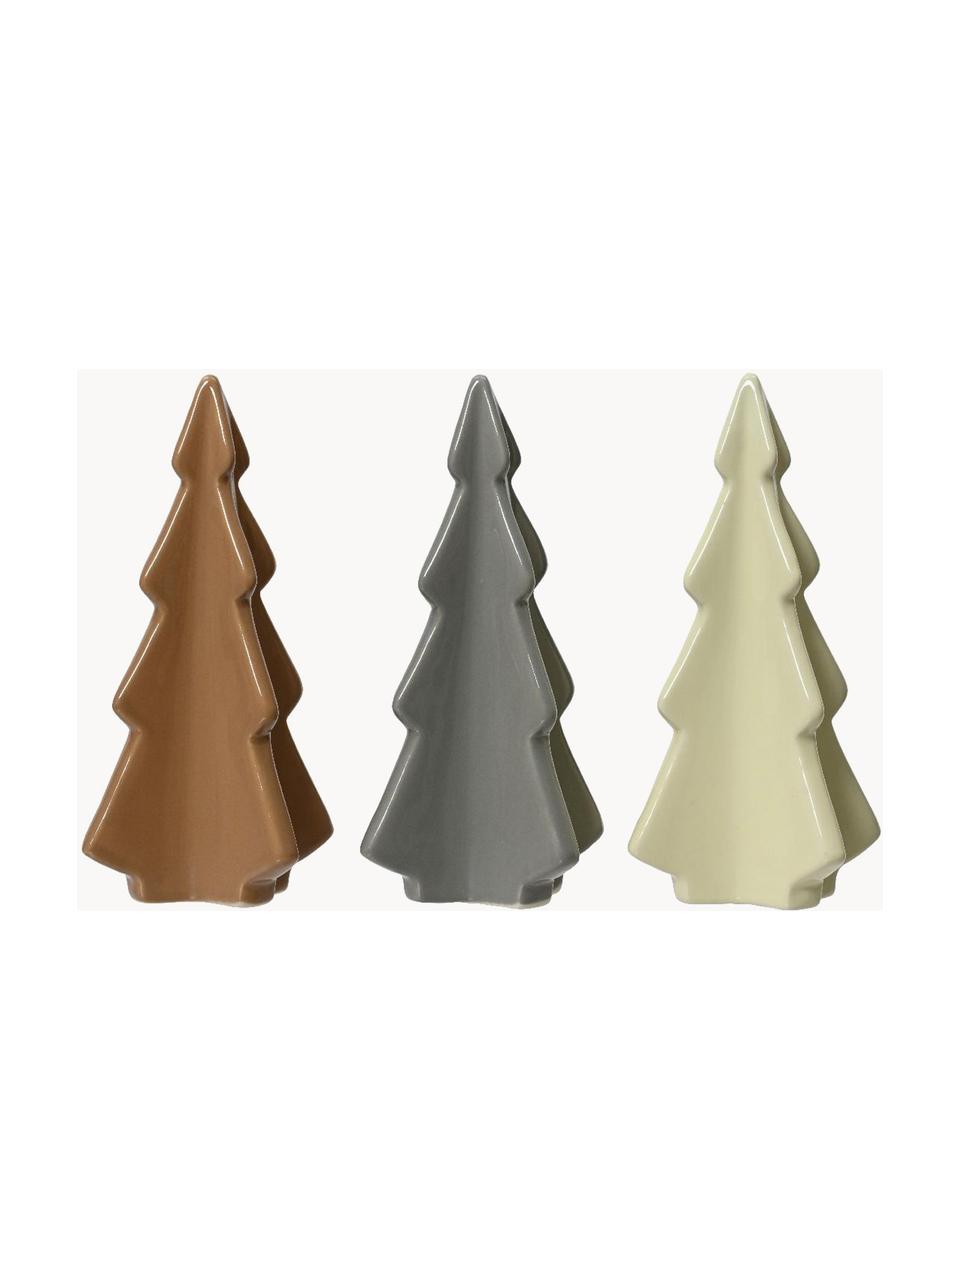 Deko-Bäume Dash aus Porzellan, 3er-Set, Porzellan, Braun, Dunkelgrau, Off White, B 6 x H 16 cm